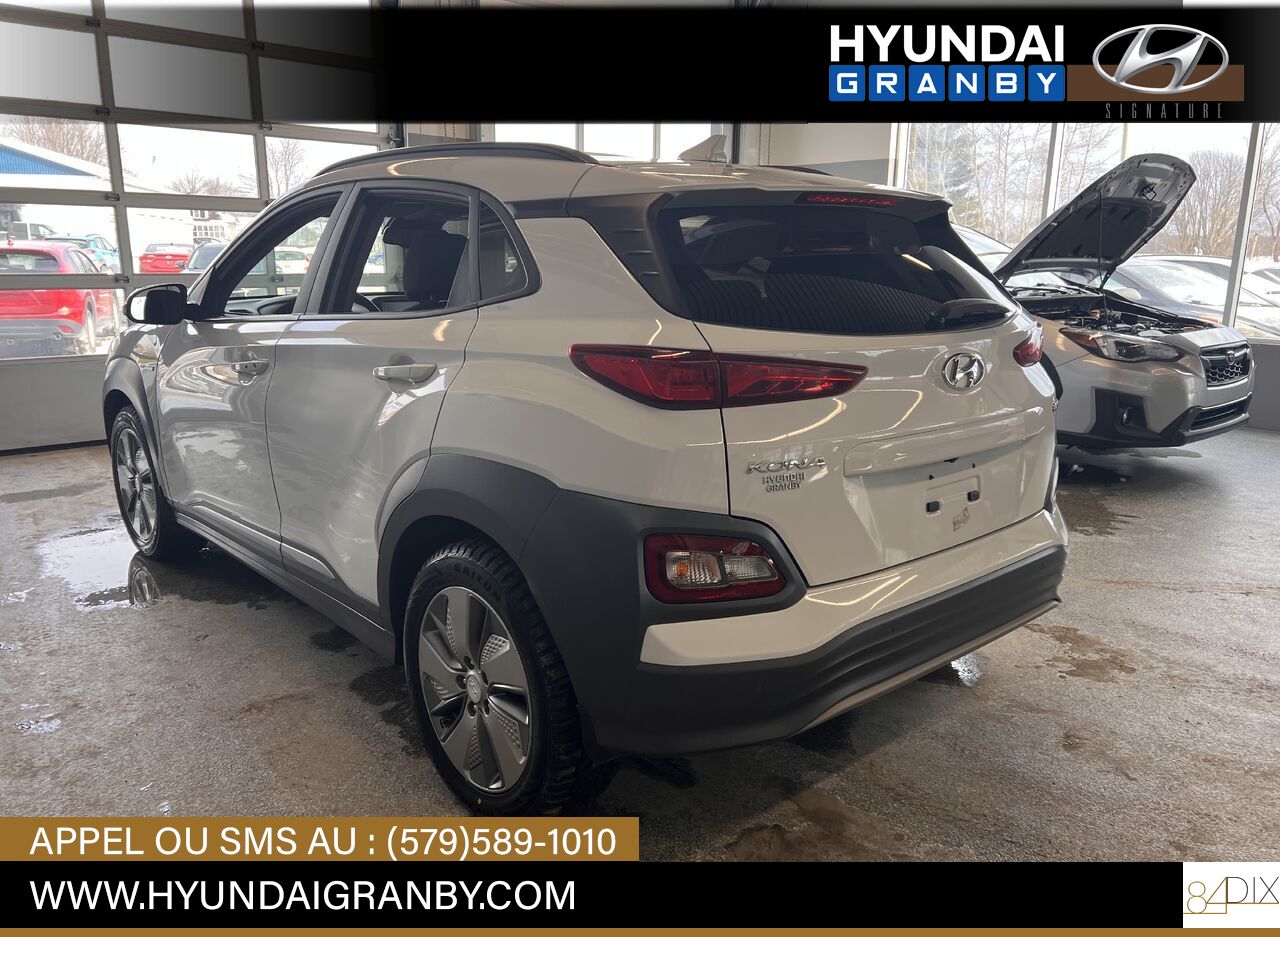 Hyundai Kona électrique 2019 Granby - photo #3